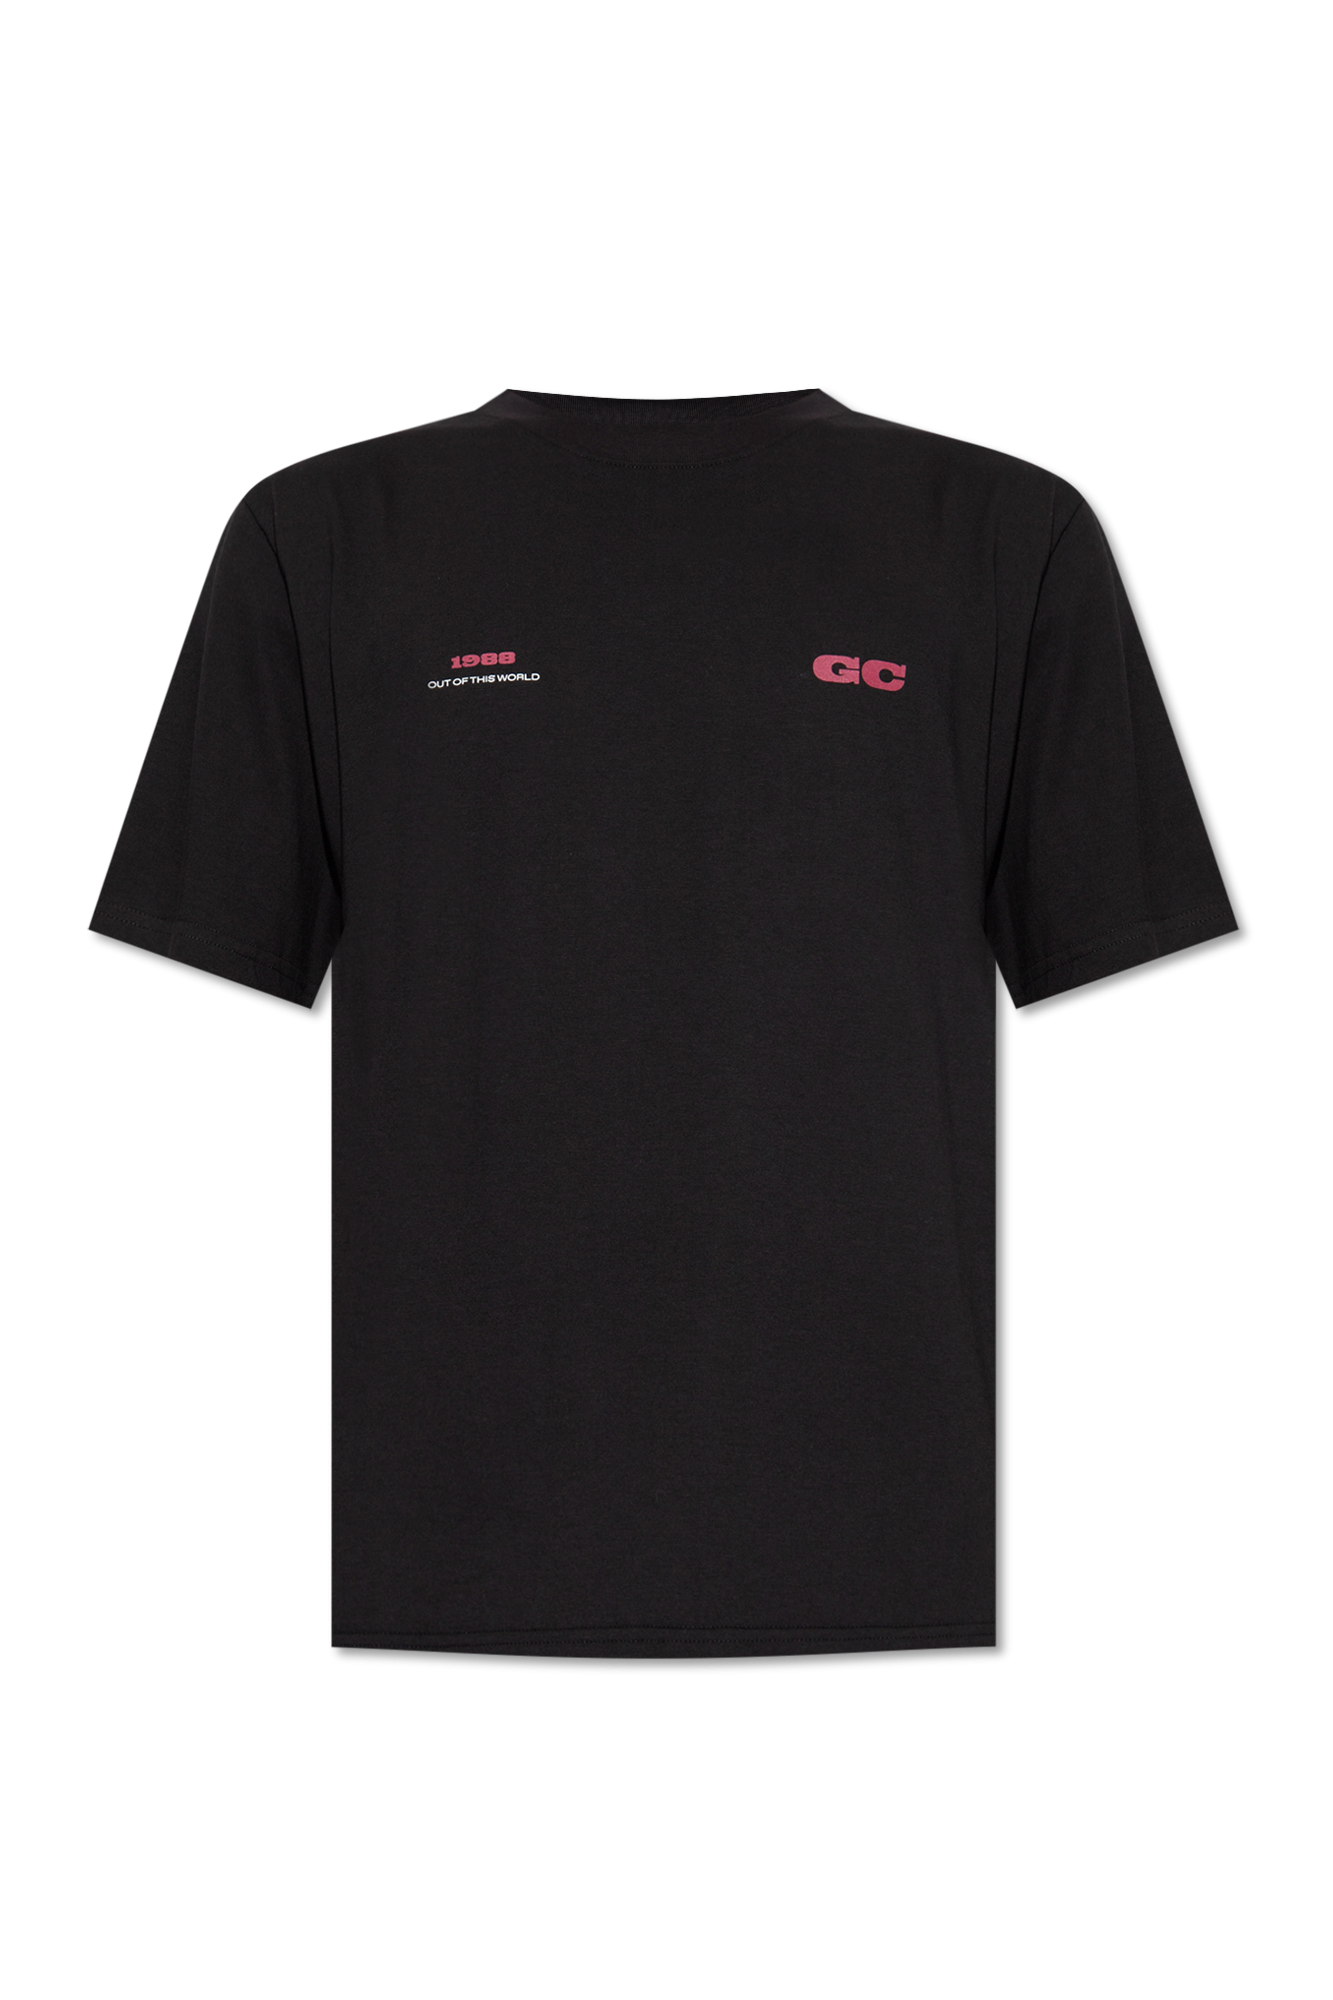 GCDS Printed T-shirt